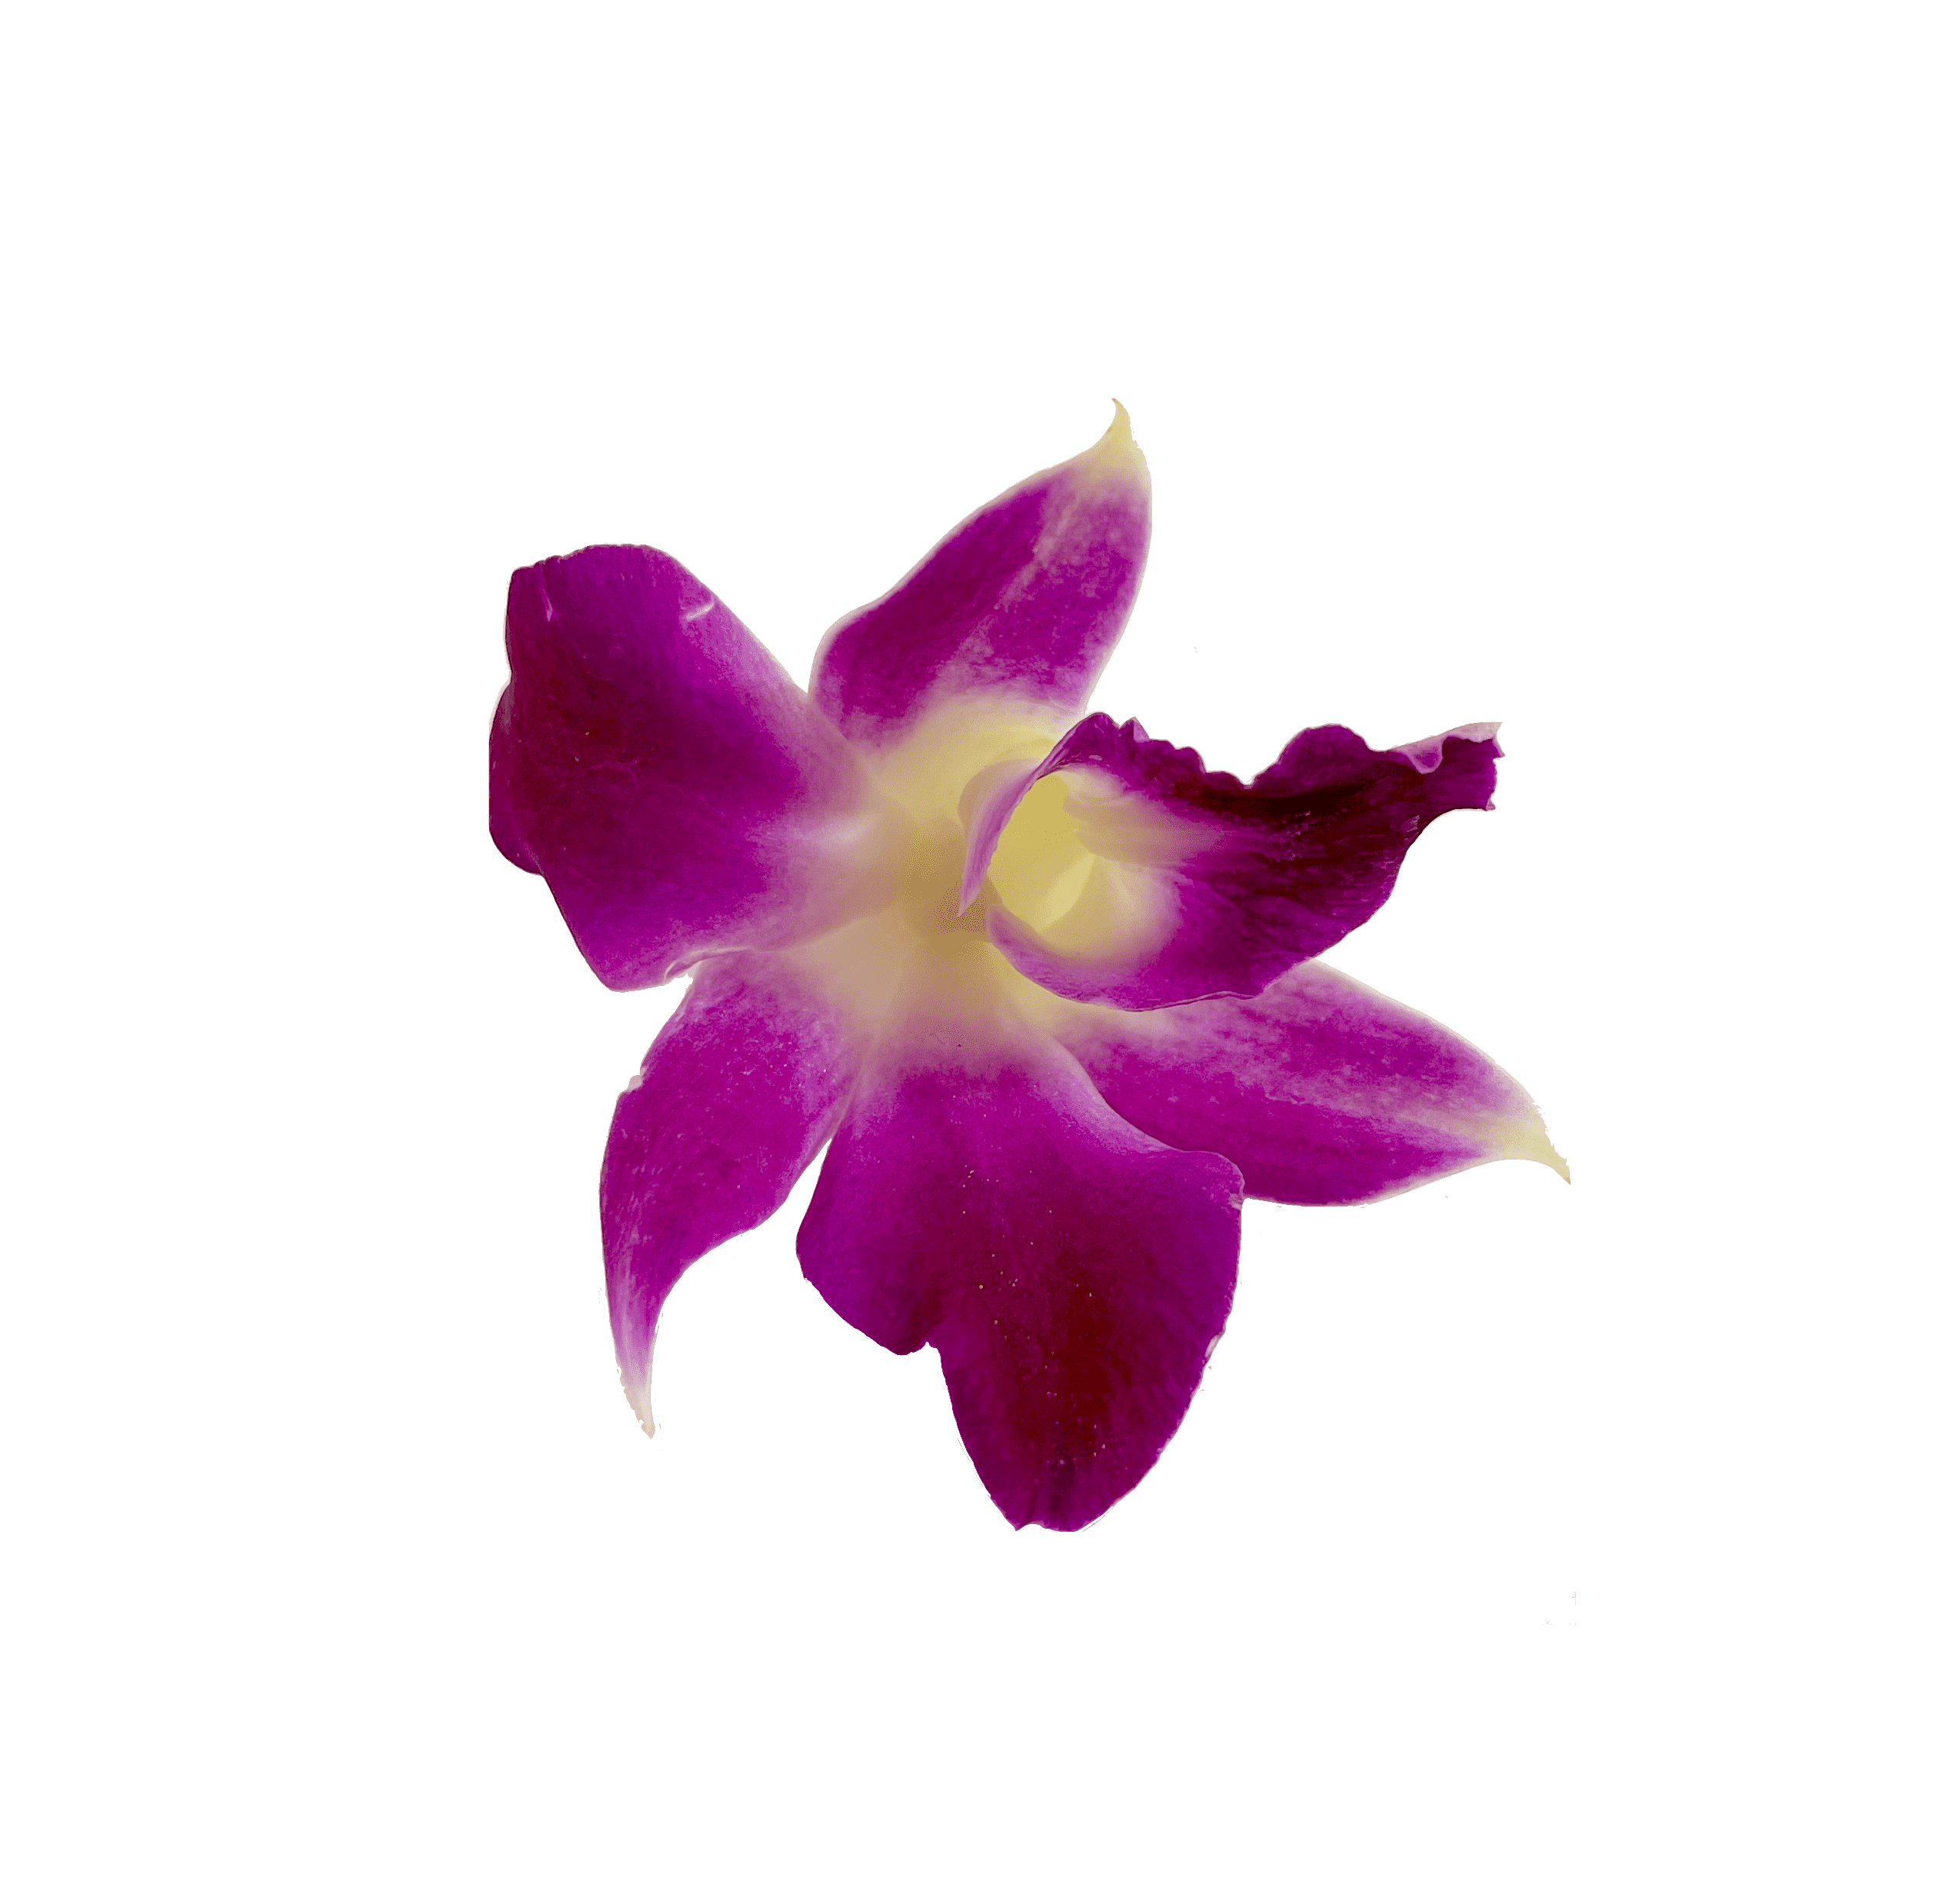 Orkide Blomma 500g/pkt